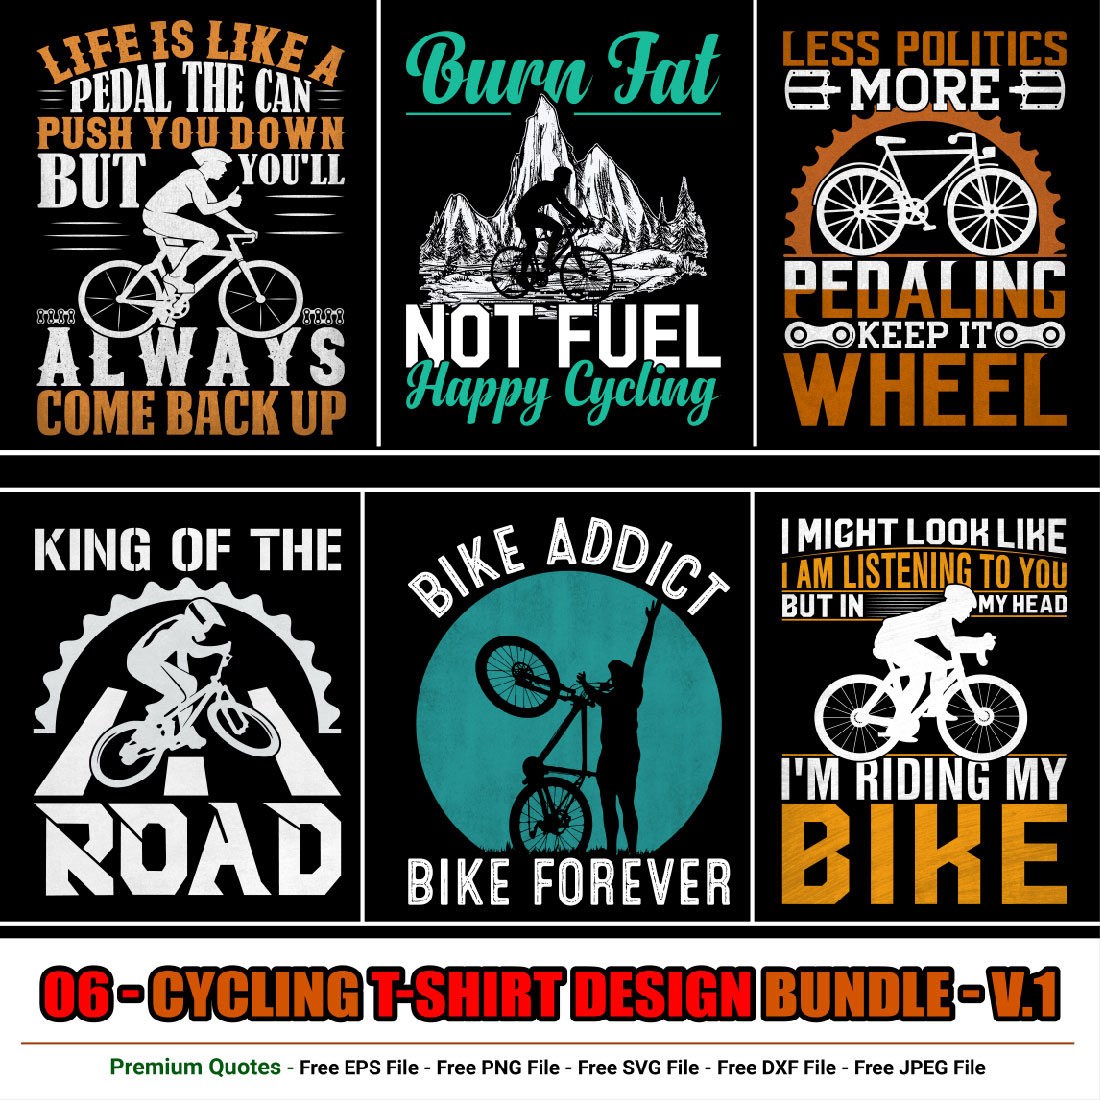 Cycling t-shirt design bundle preview image.